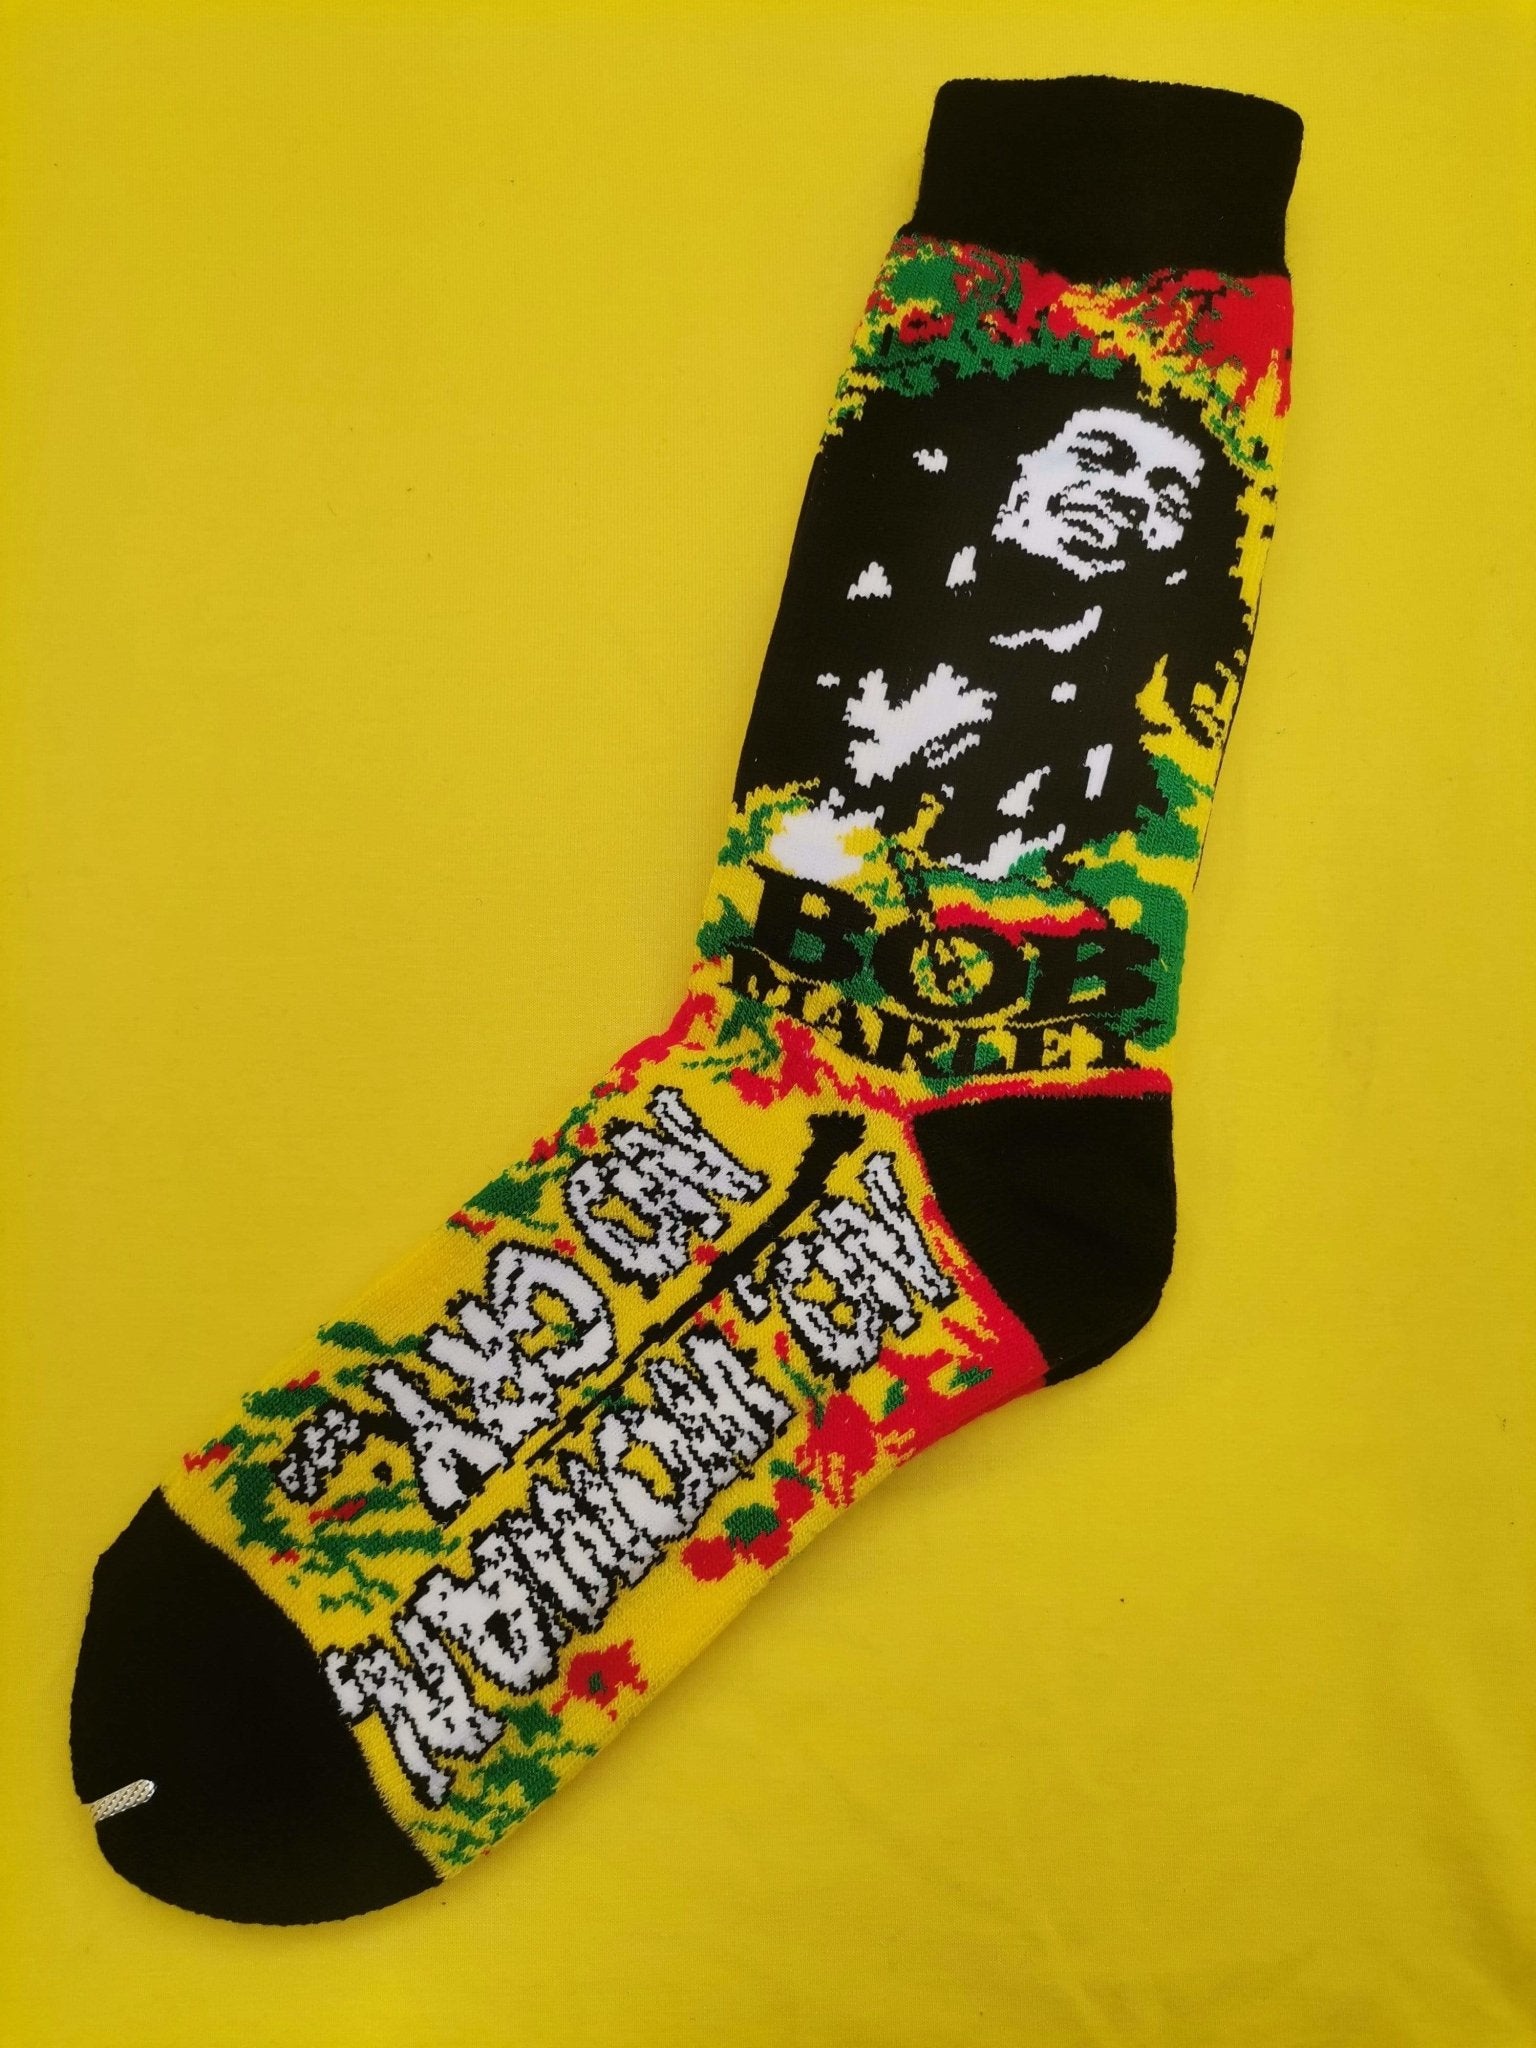 Marley Black Socks